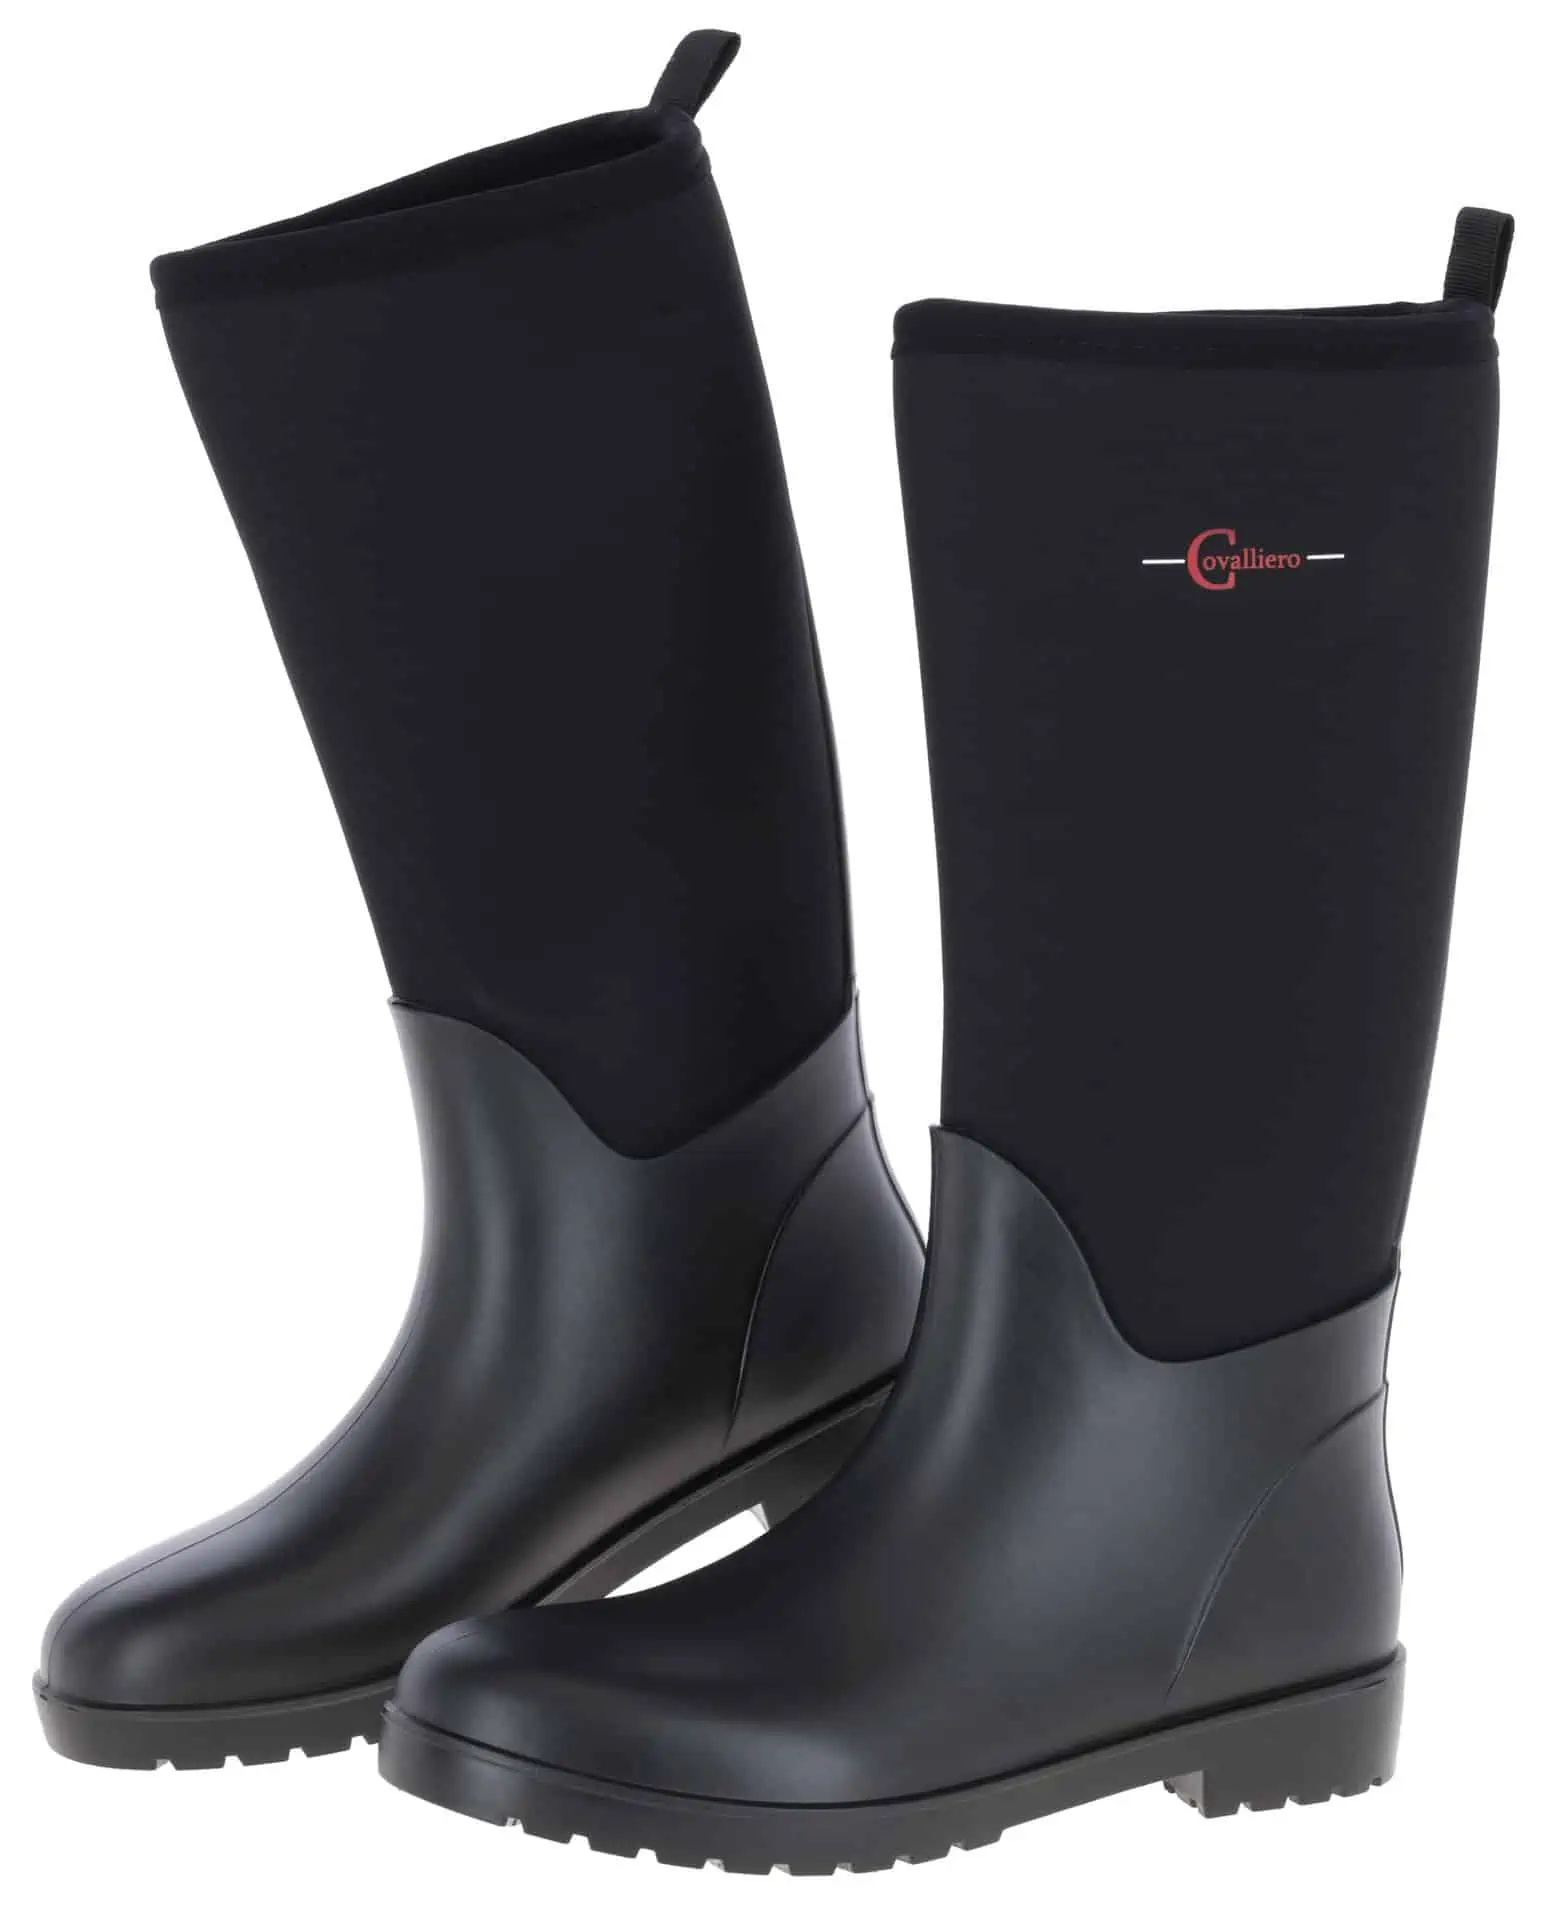 Boots NeoLite black, size 42